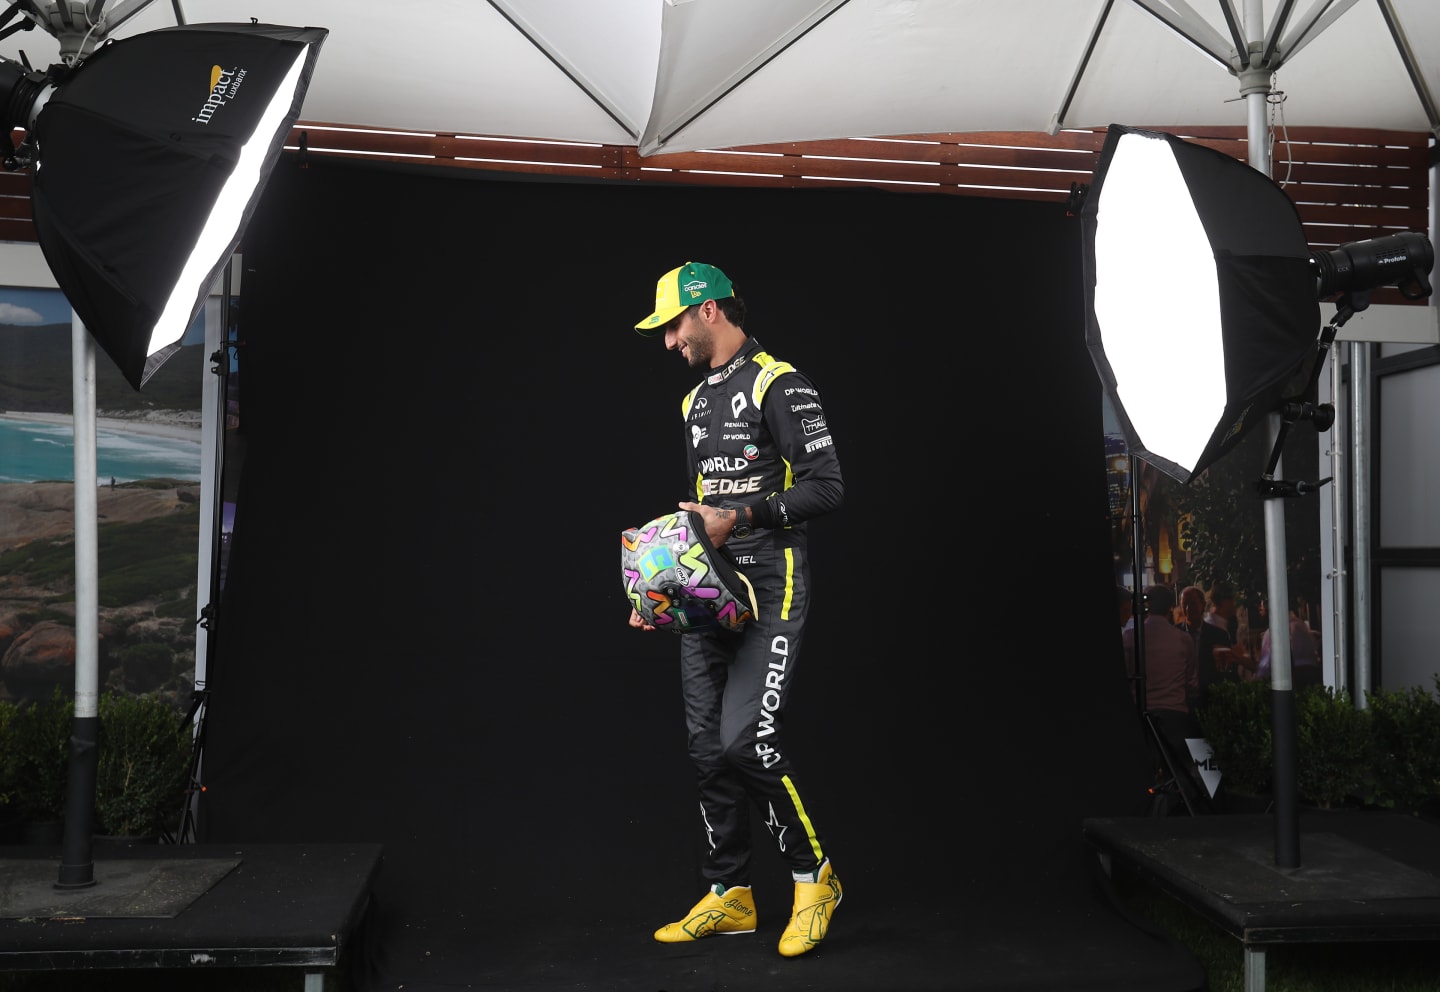 MELBOURNE, AUSTRALIA - MARCH 12: Daniel Ricciardo of Australia and Renault Sport F1 poses for a